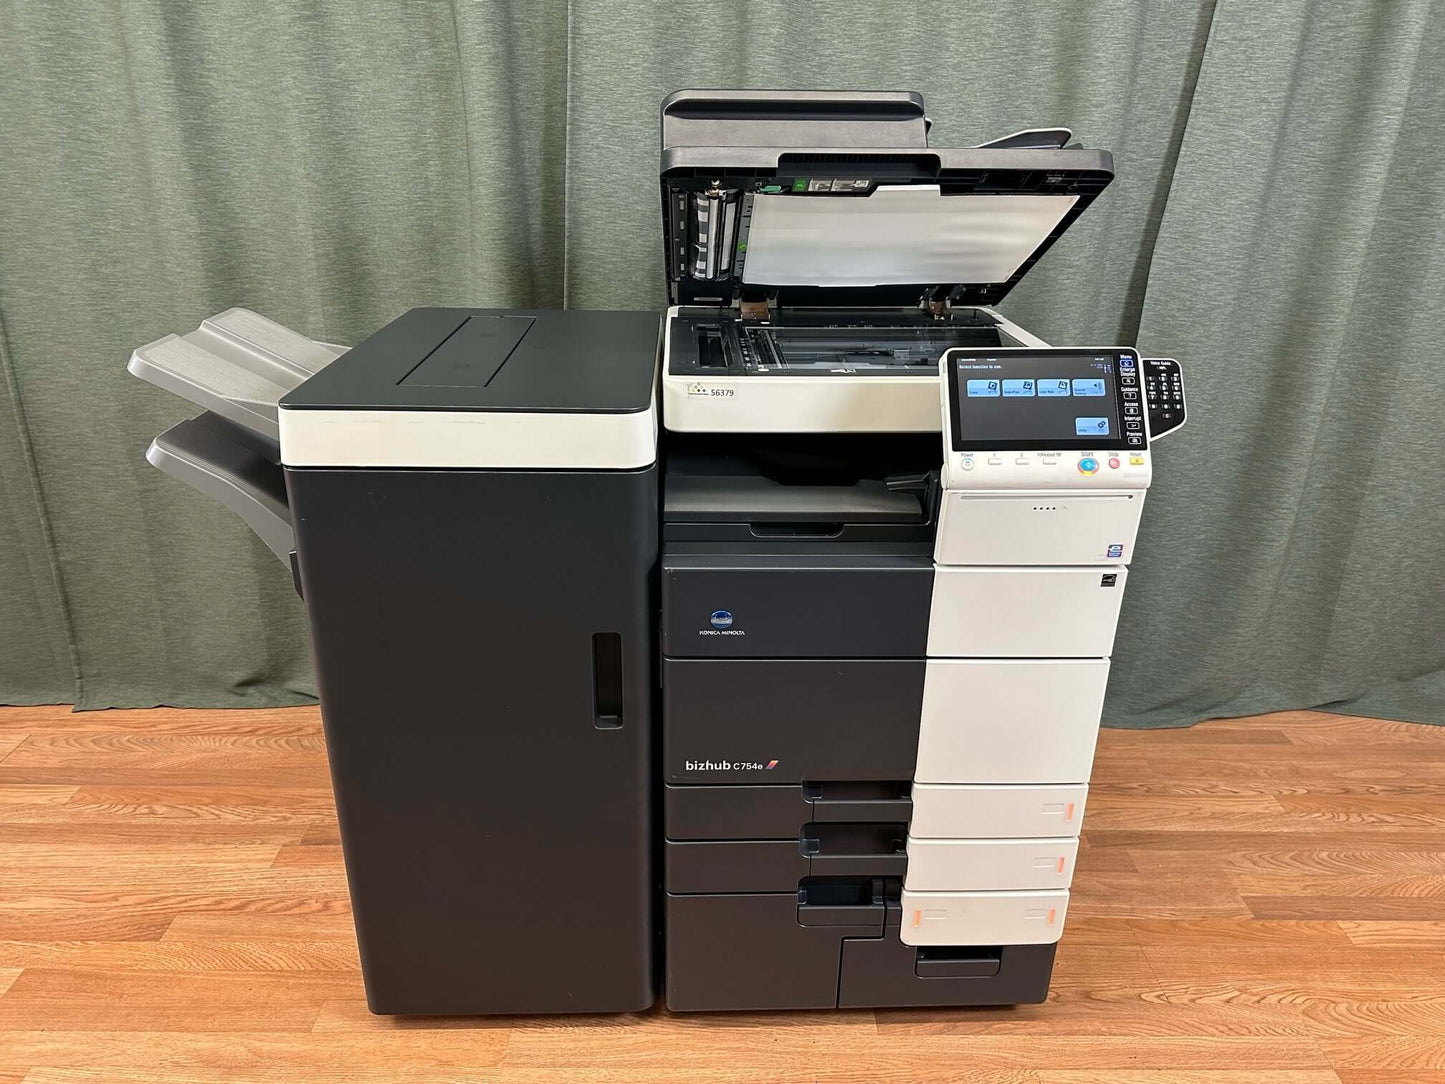 Konica Minolta Biz Hub C754e Color Copier Printer Scanner Finisher Low Use 92K! - copier-clearance-center